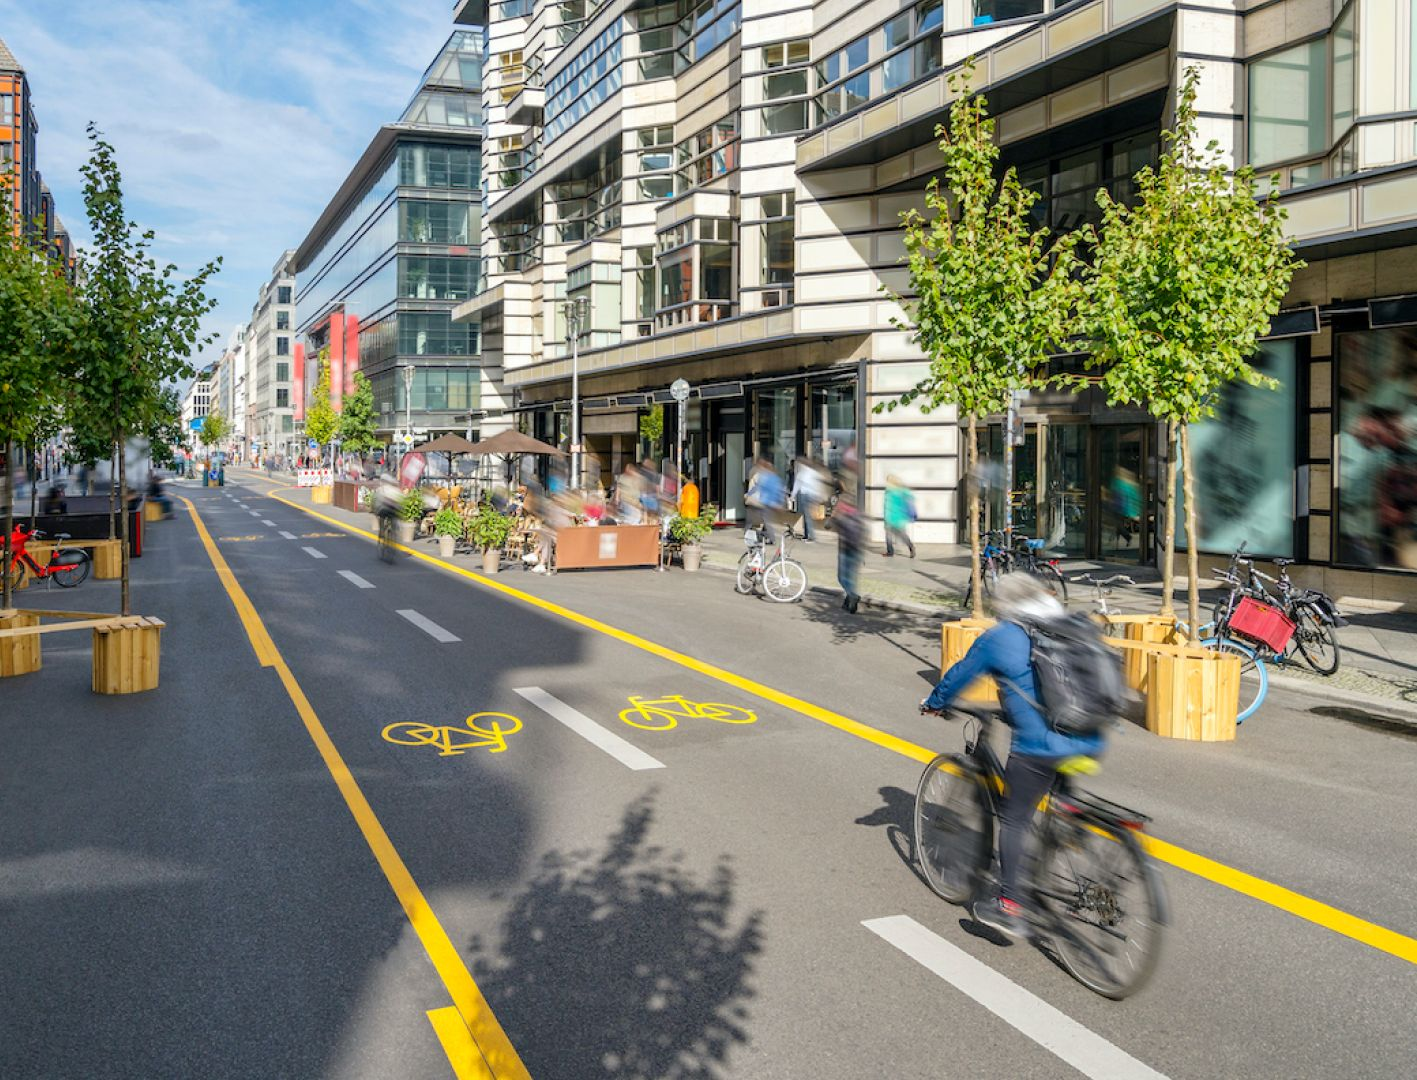 A futuristic city with developed bike lanes